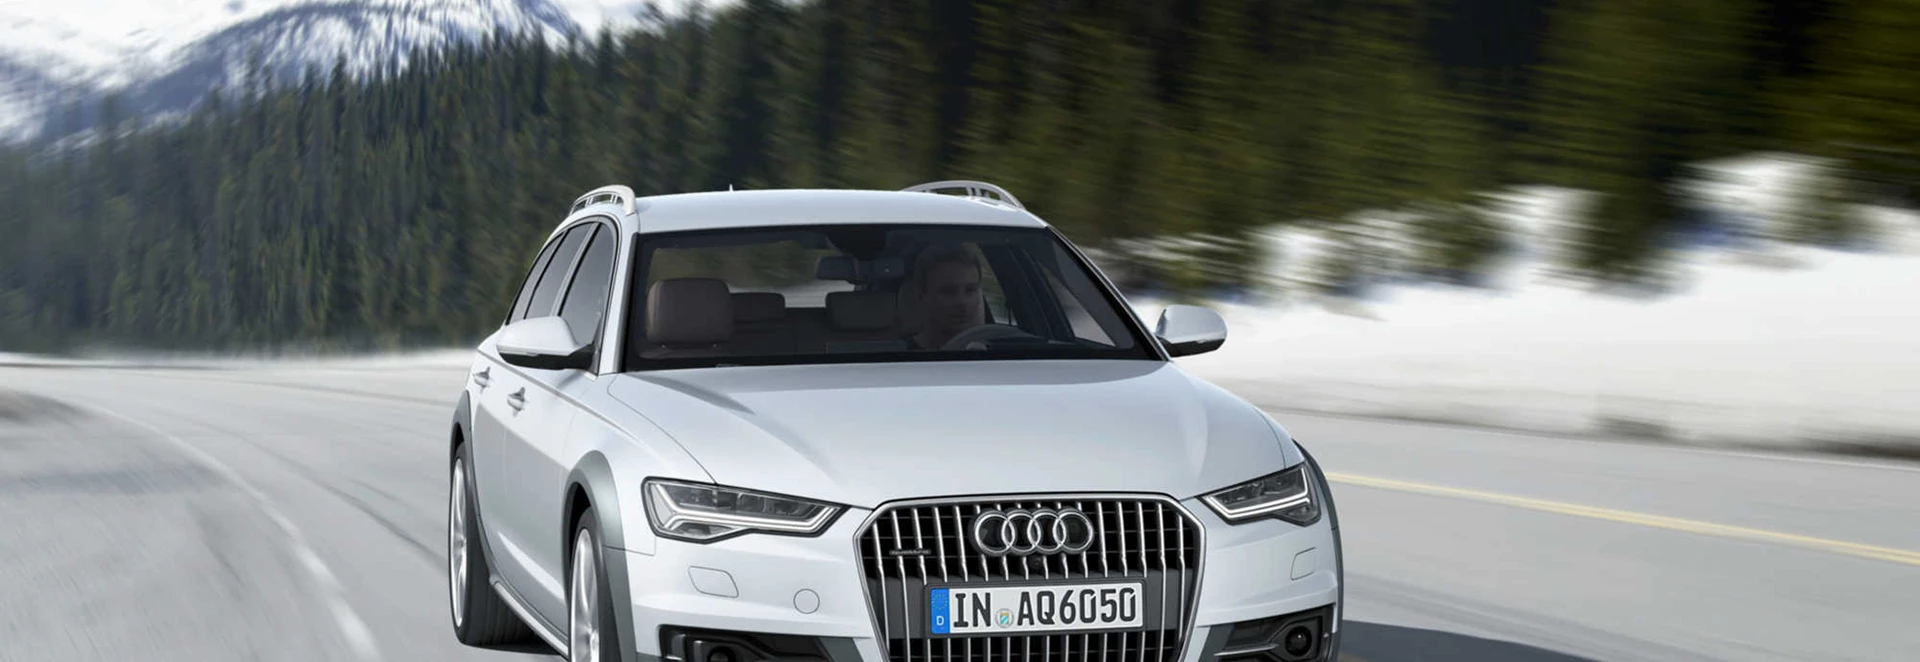 Audi A6 allroad estate review 